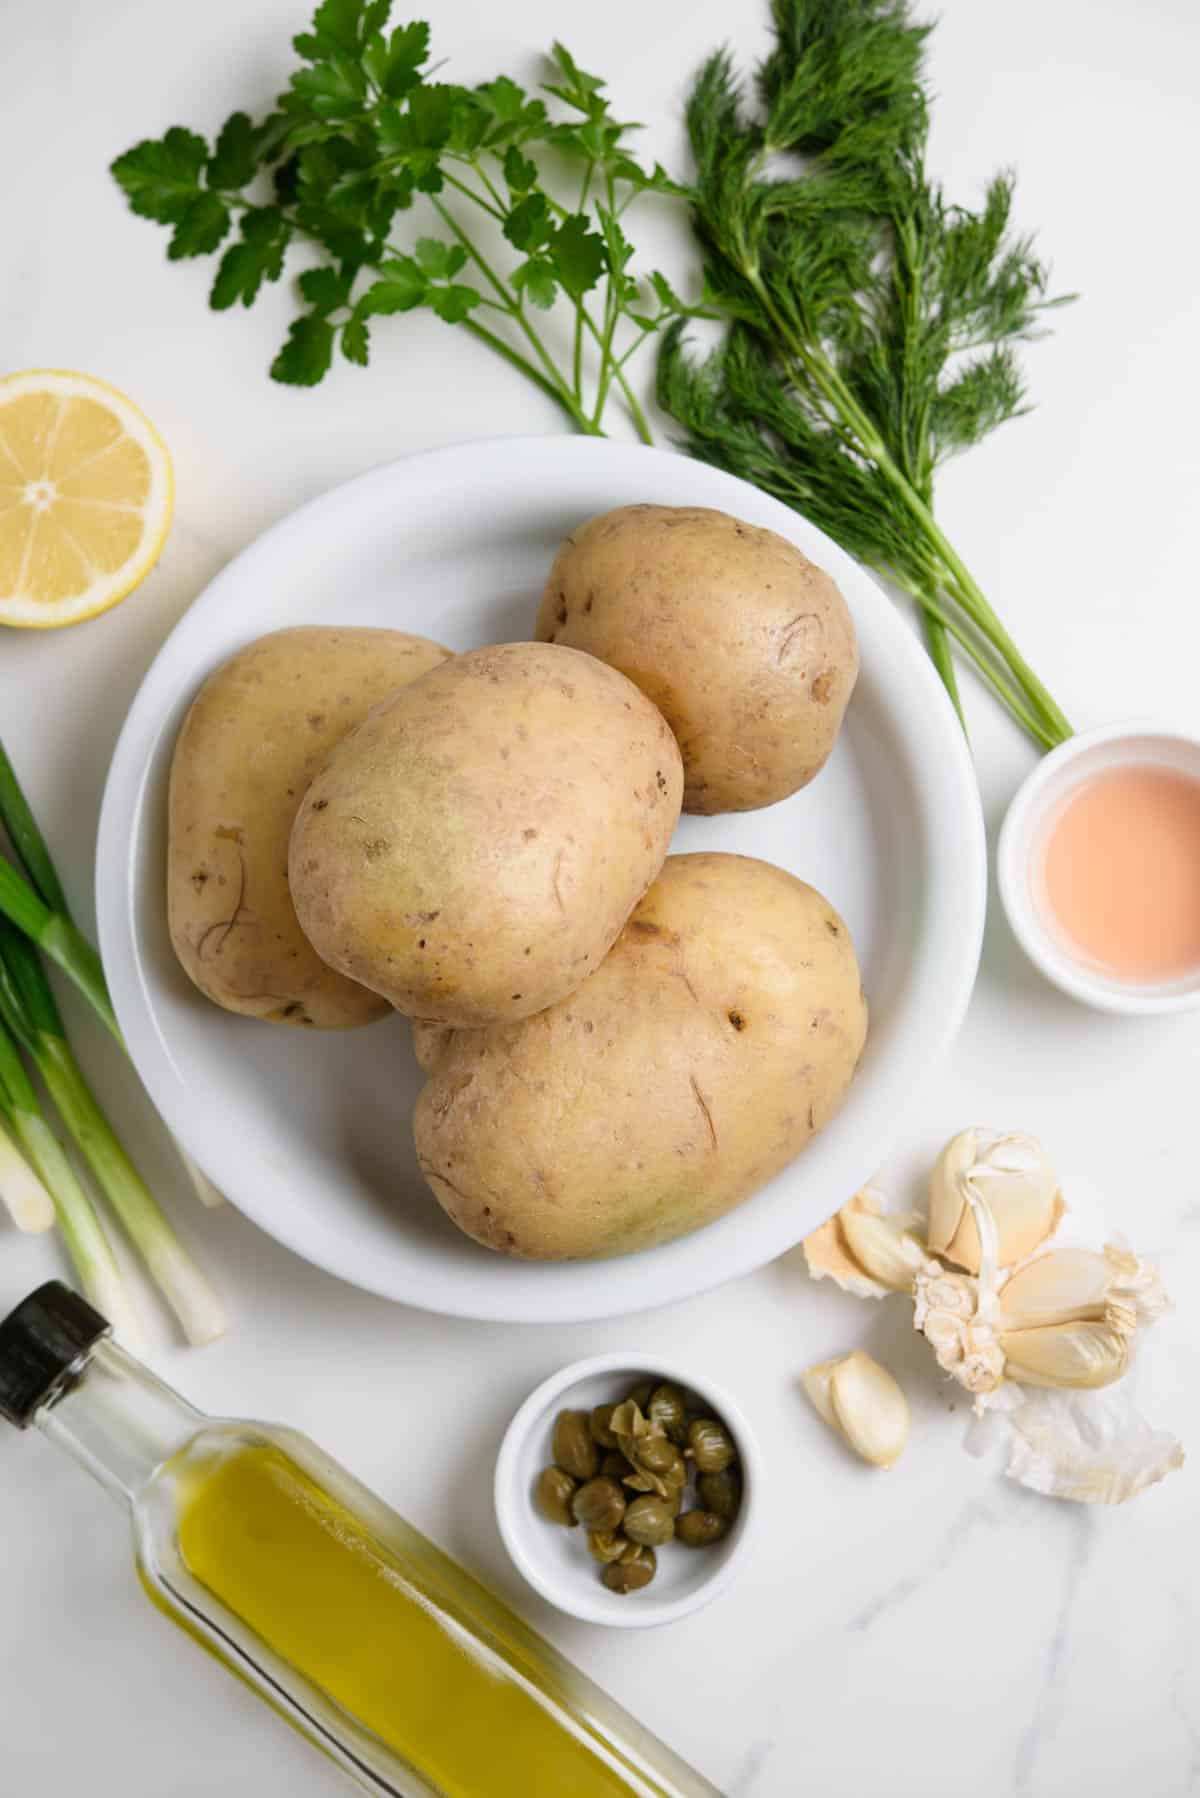 Potato Salad Ingredients